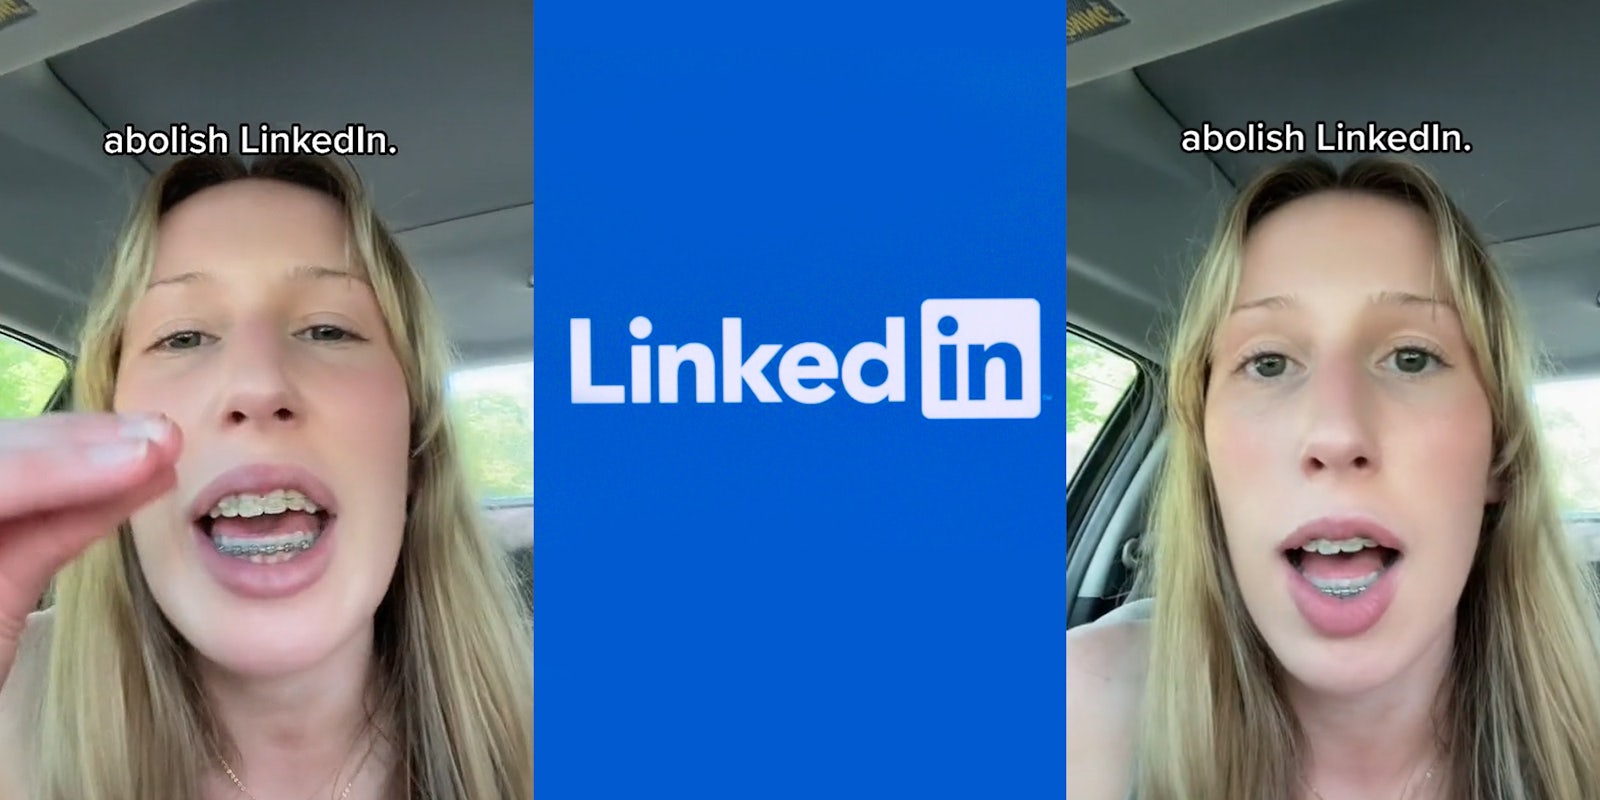 woman speaking in car hand up caption 'abolish LinkedIn' (l) Linkedin logo on blue background (c) woman speaking in car caption 'abolish LinkedIn' (r)